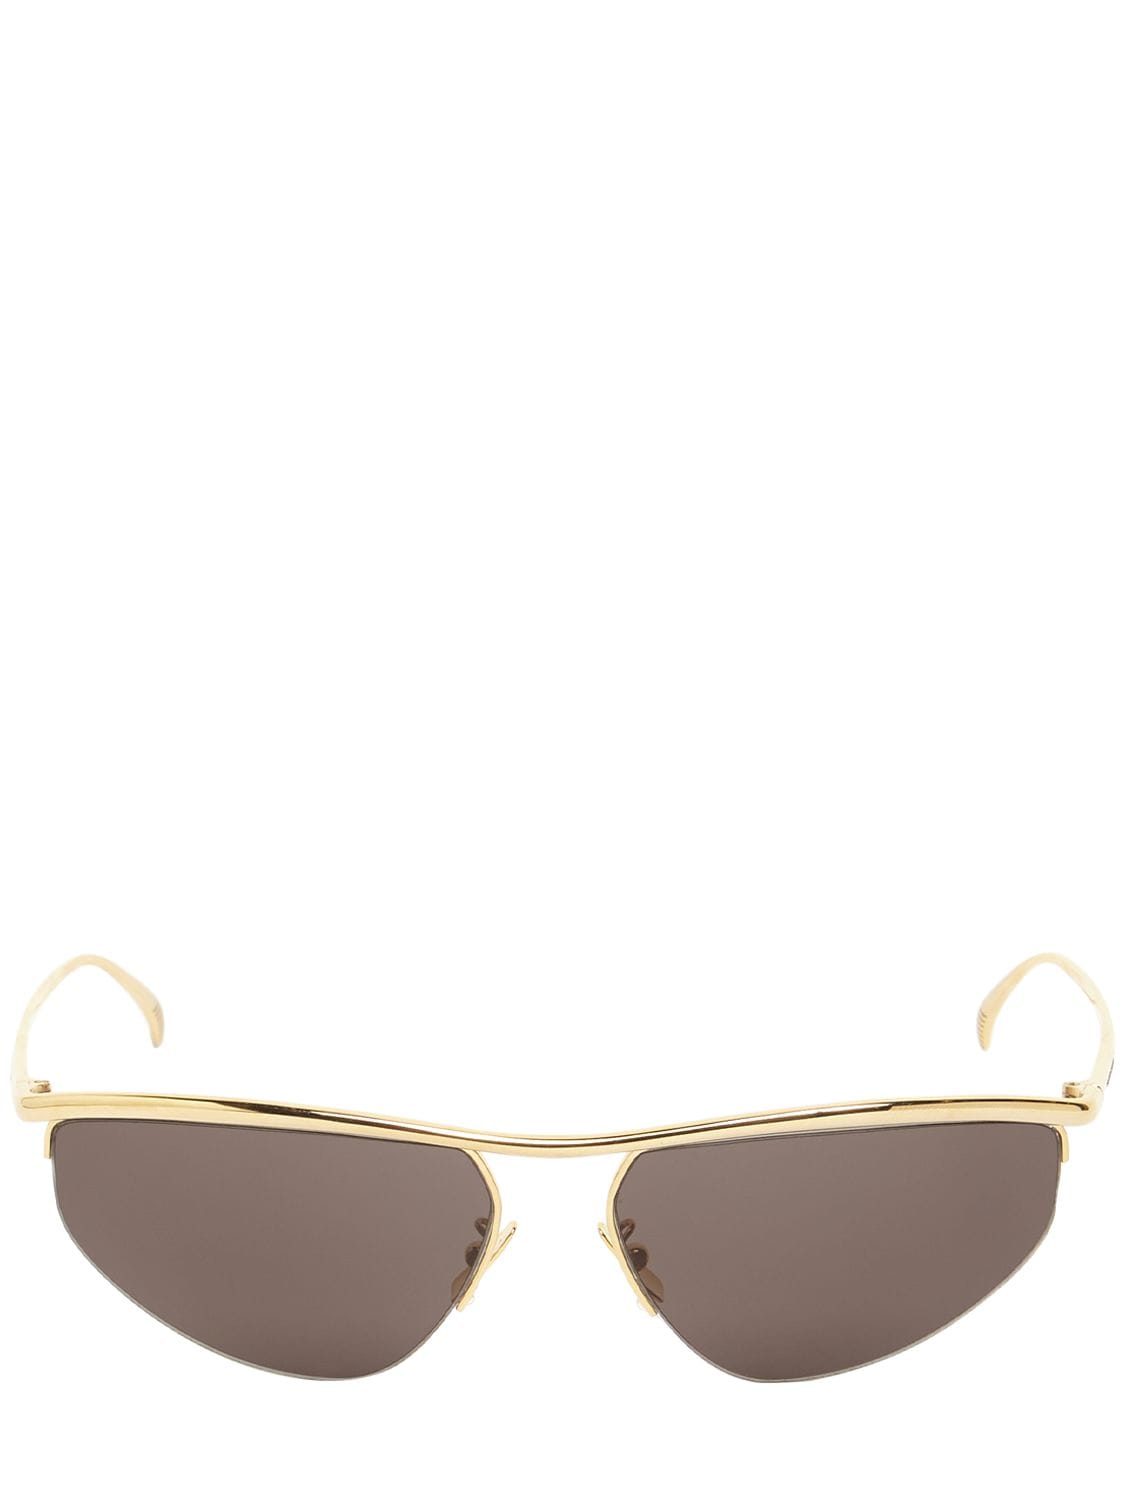 Bv1091s Oval Metal Sunglasses